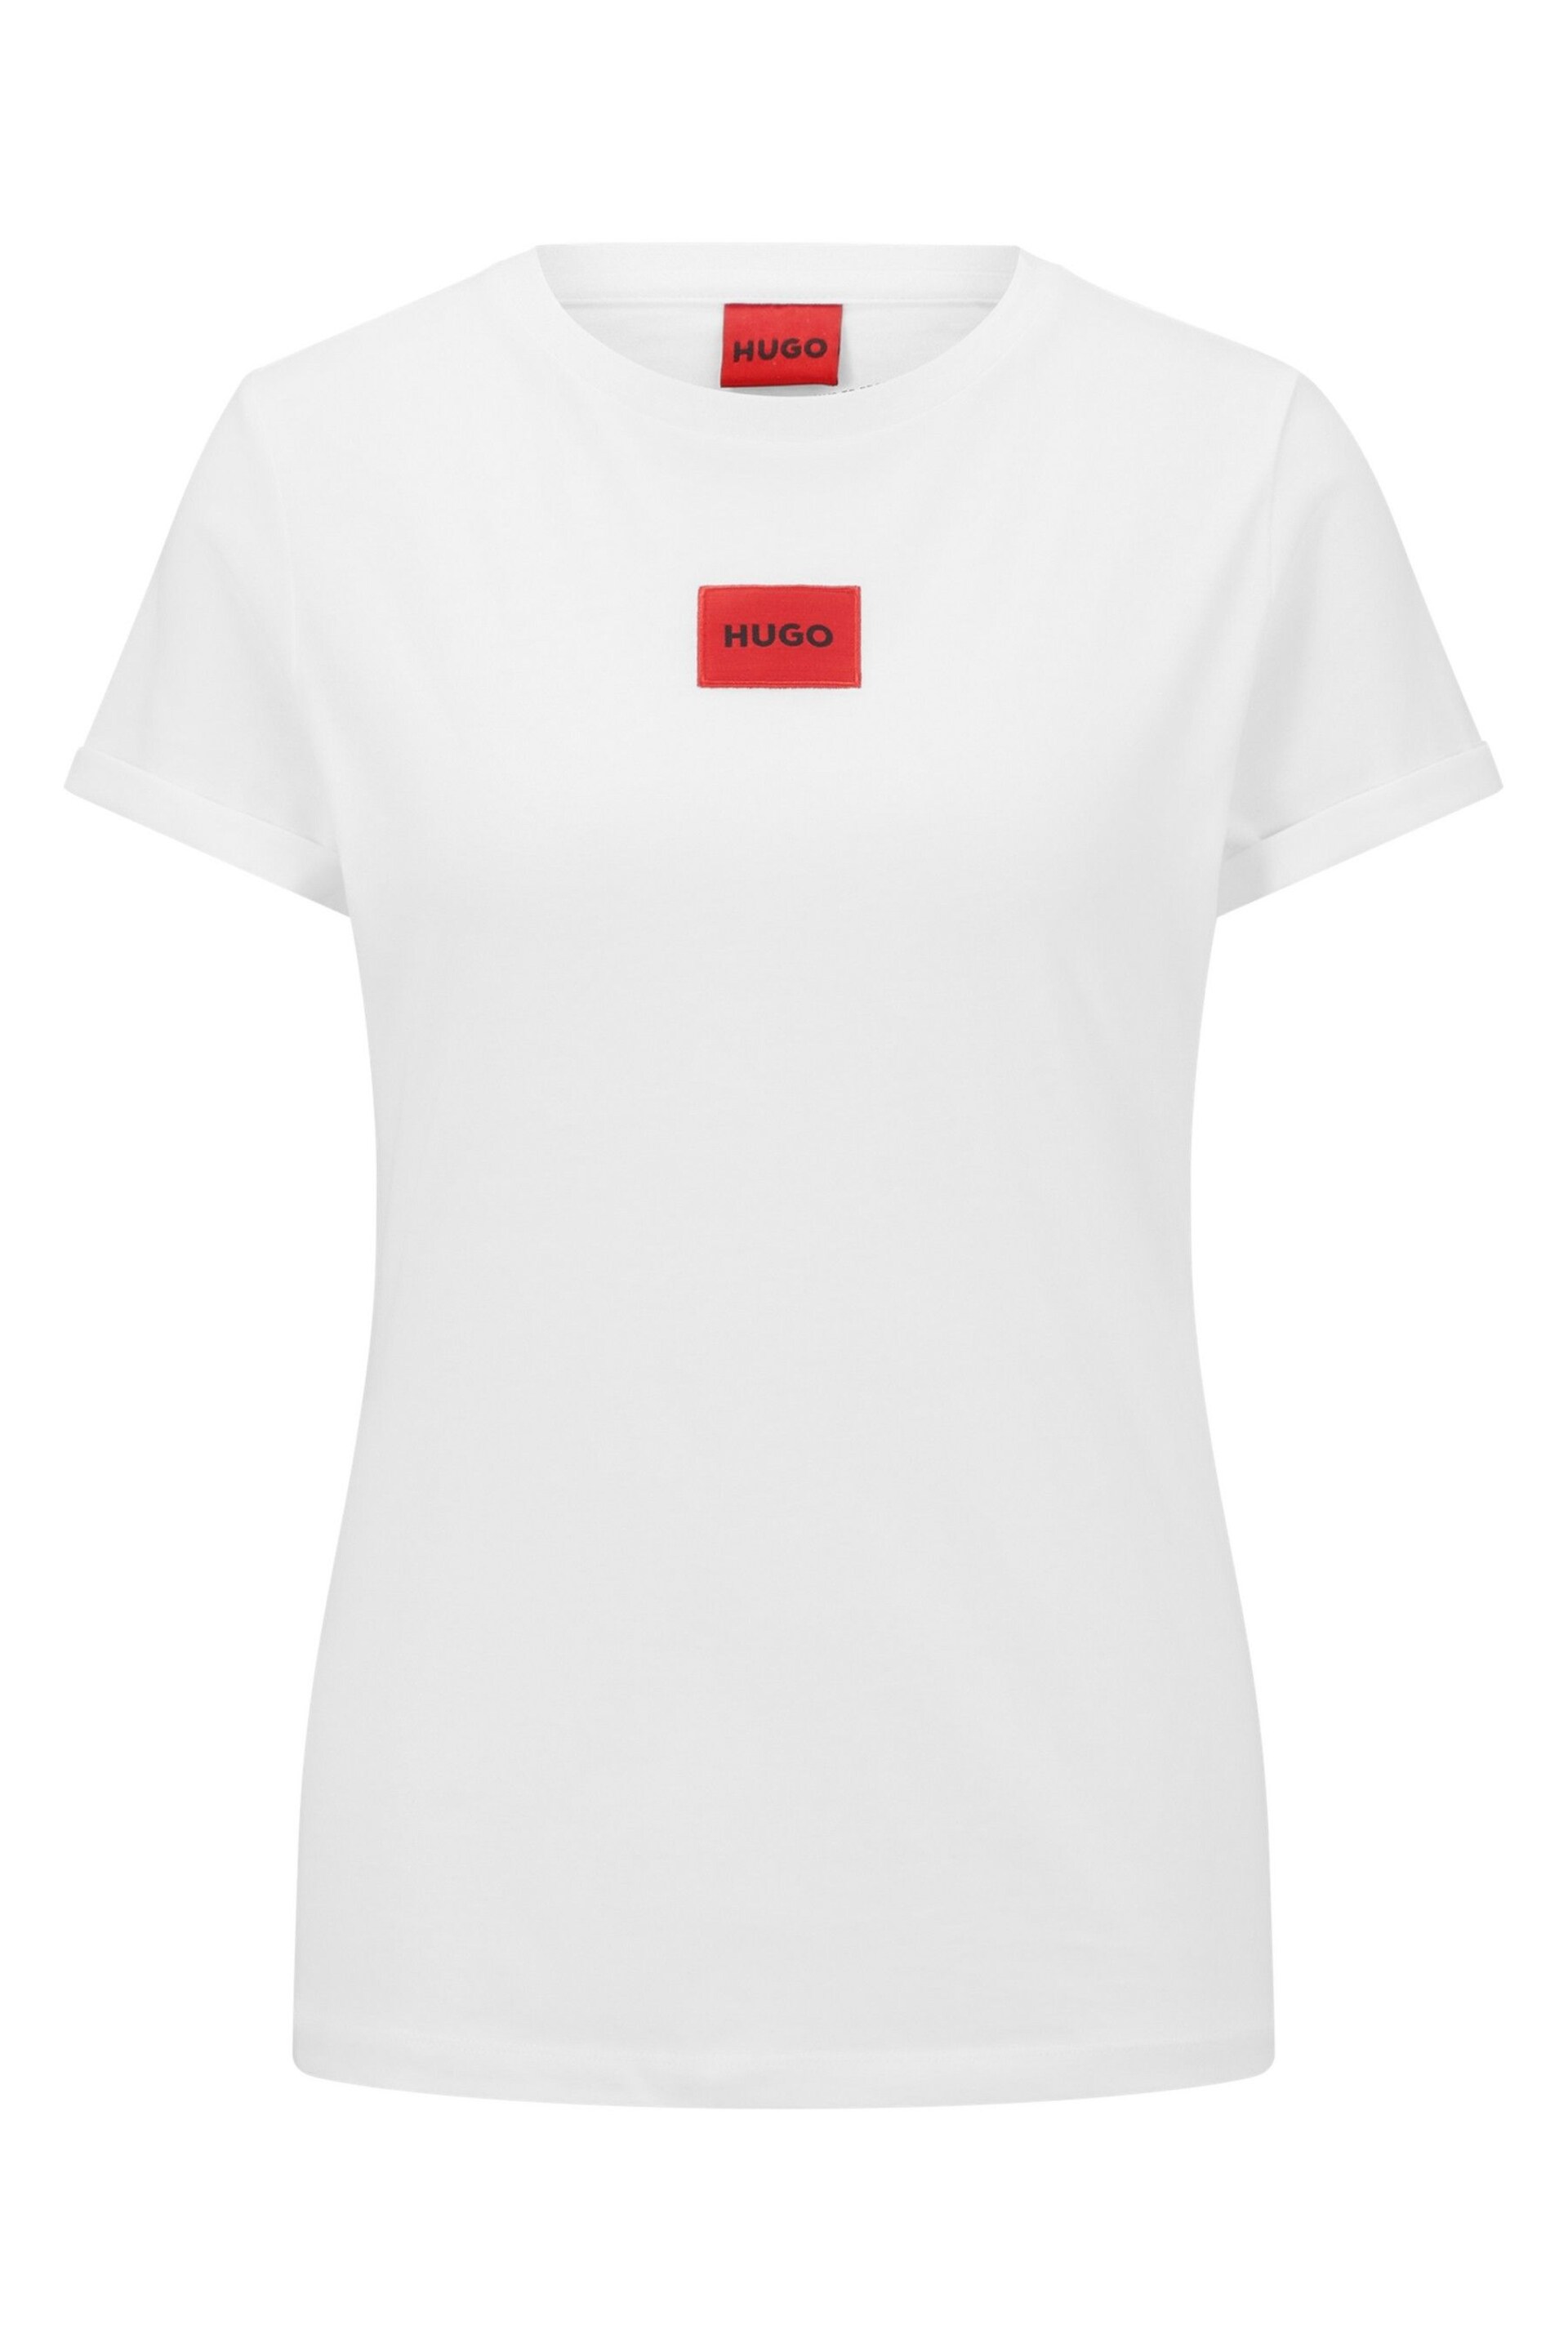 HUGO Slim Fit Box Logo T-Shirt - Image 4 of 4